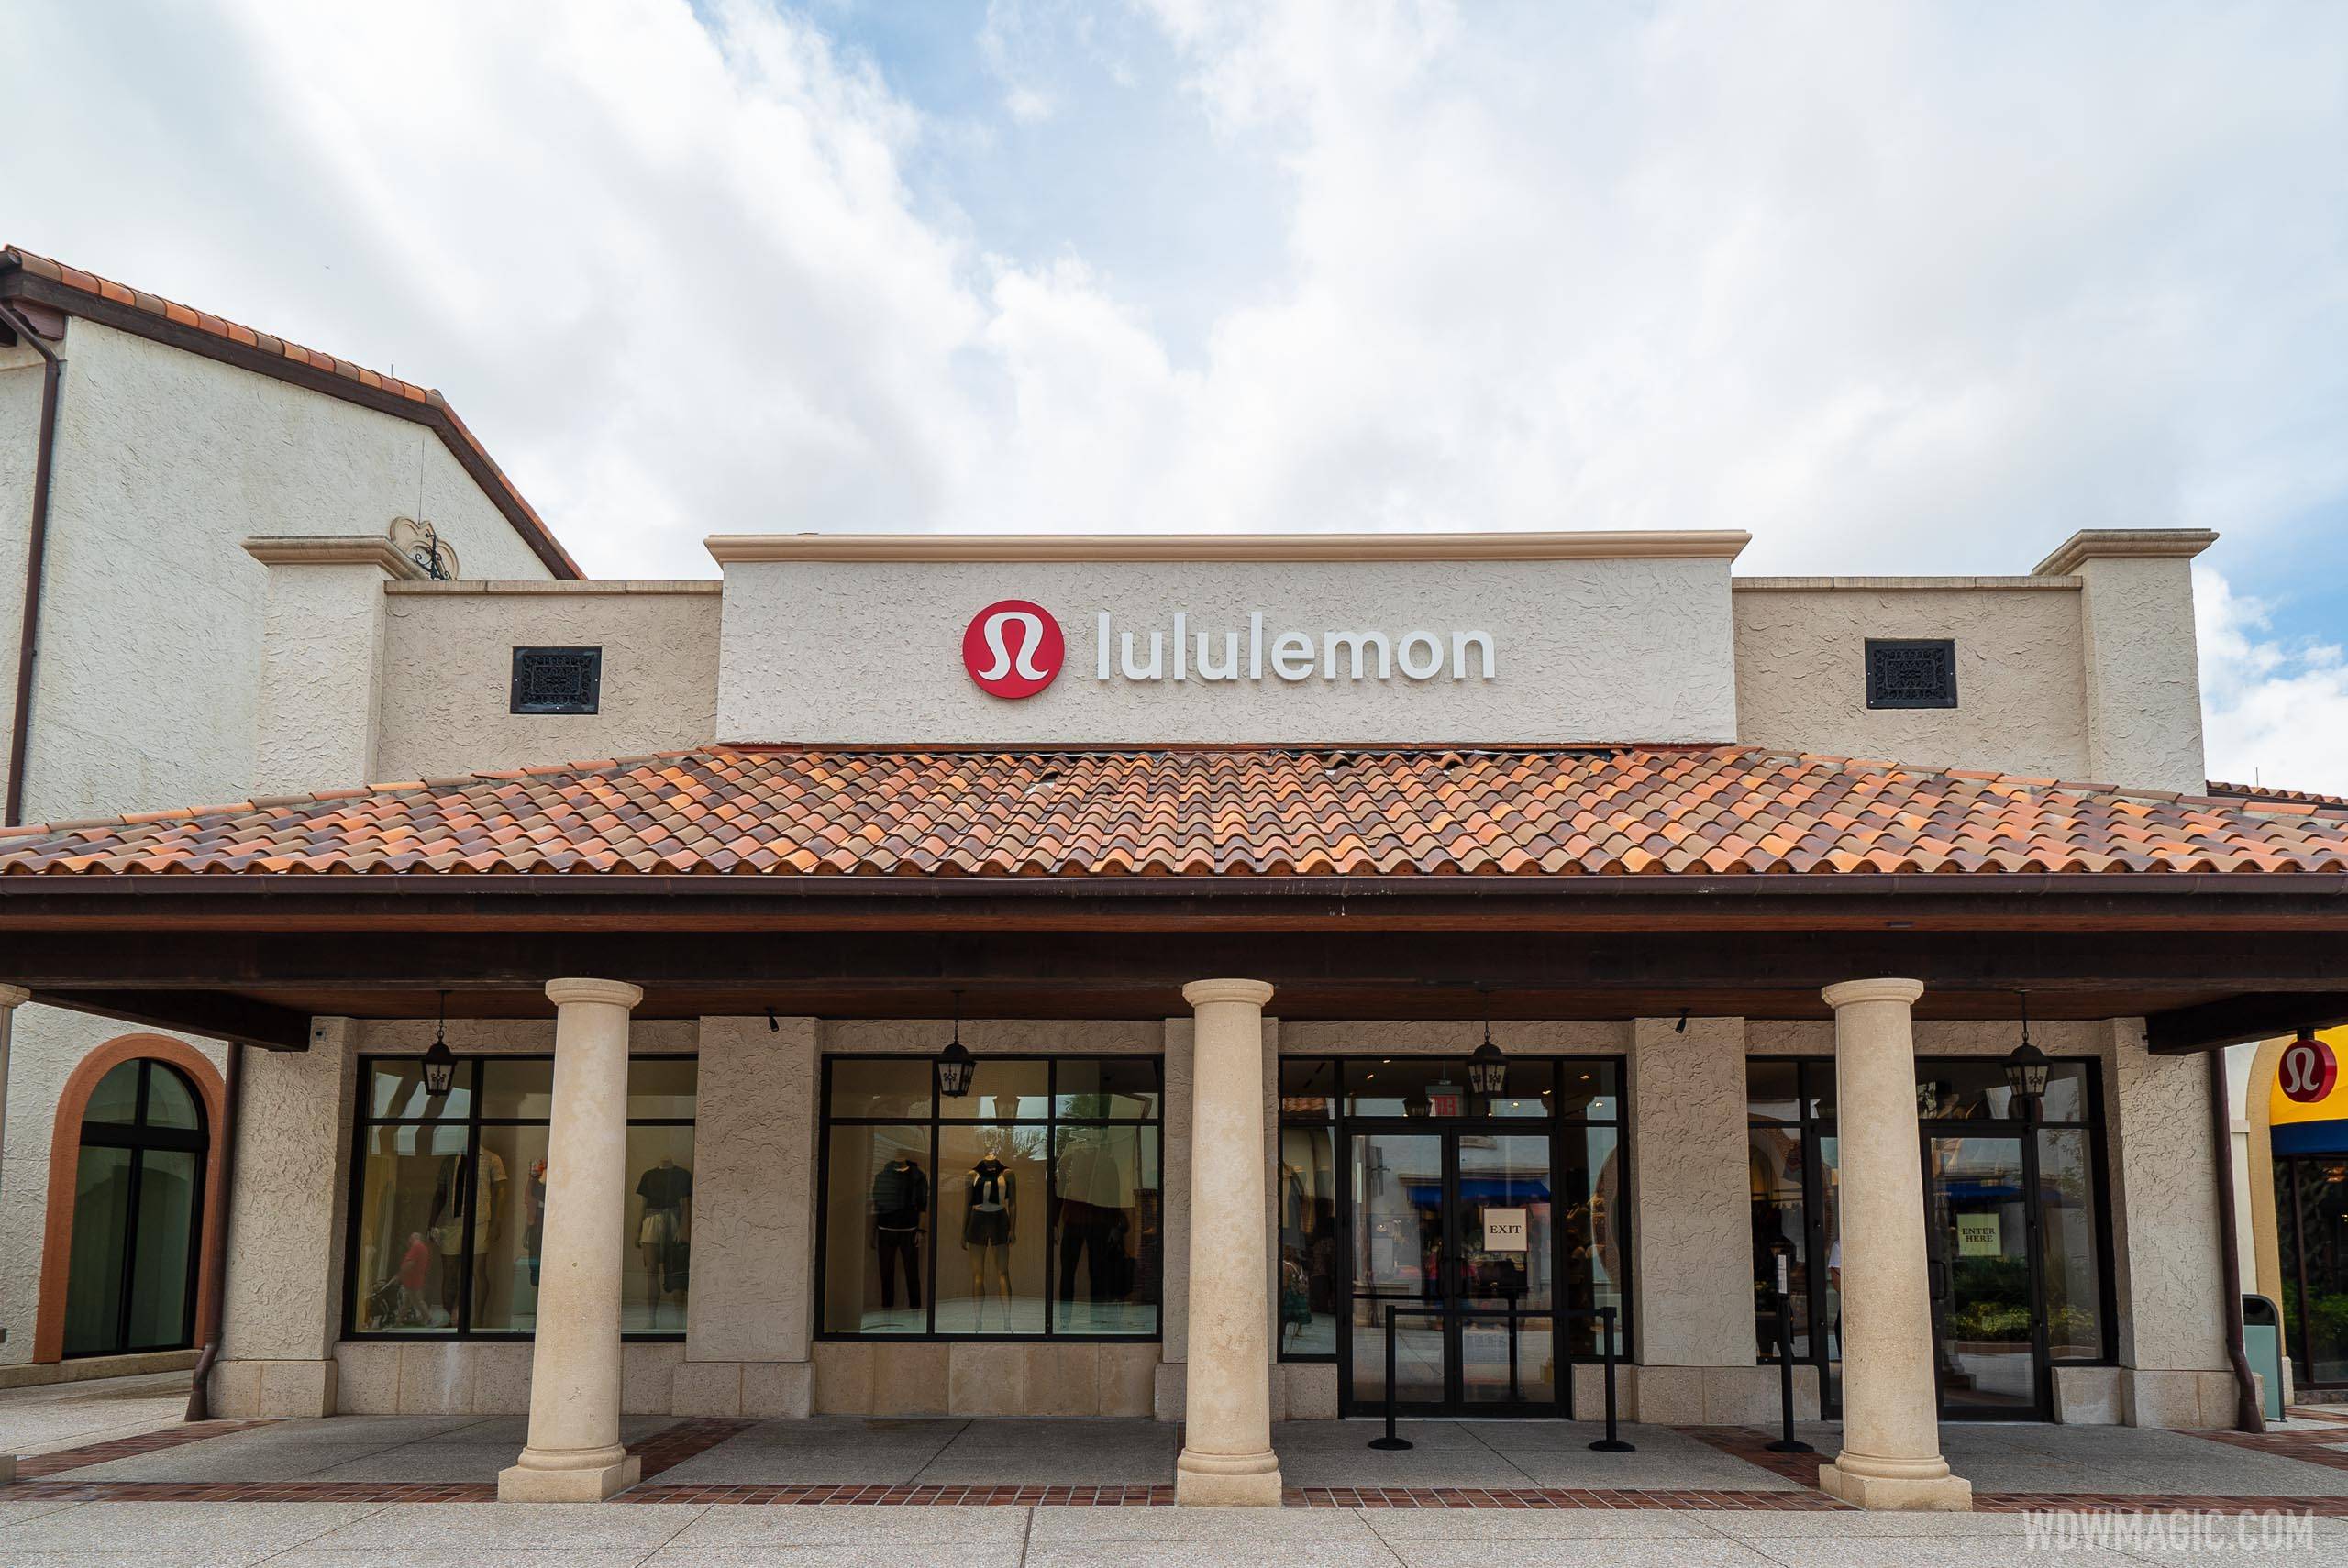 Cheap lululemon Activewear for sale near Orlando, Florida, Facebook  Marketplace